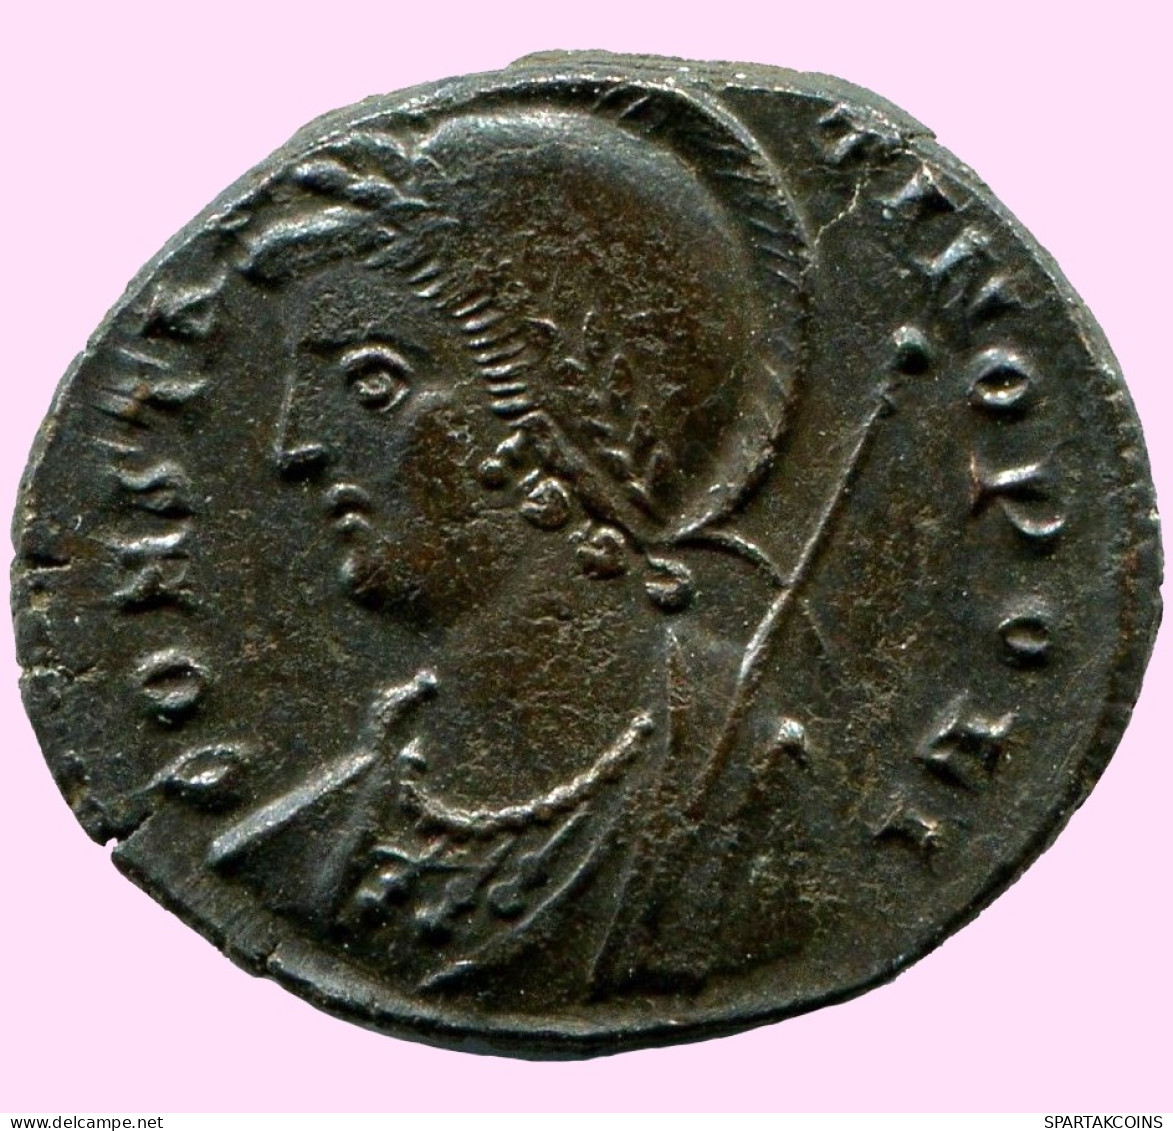 CONSTANTINUS I CONSTANTINOPOLI FOLLIS Ancient ROMAN Coin #ANC12019.25.U.A - Der Christlischen Kaiser (307 / 363)